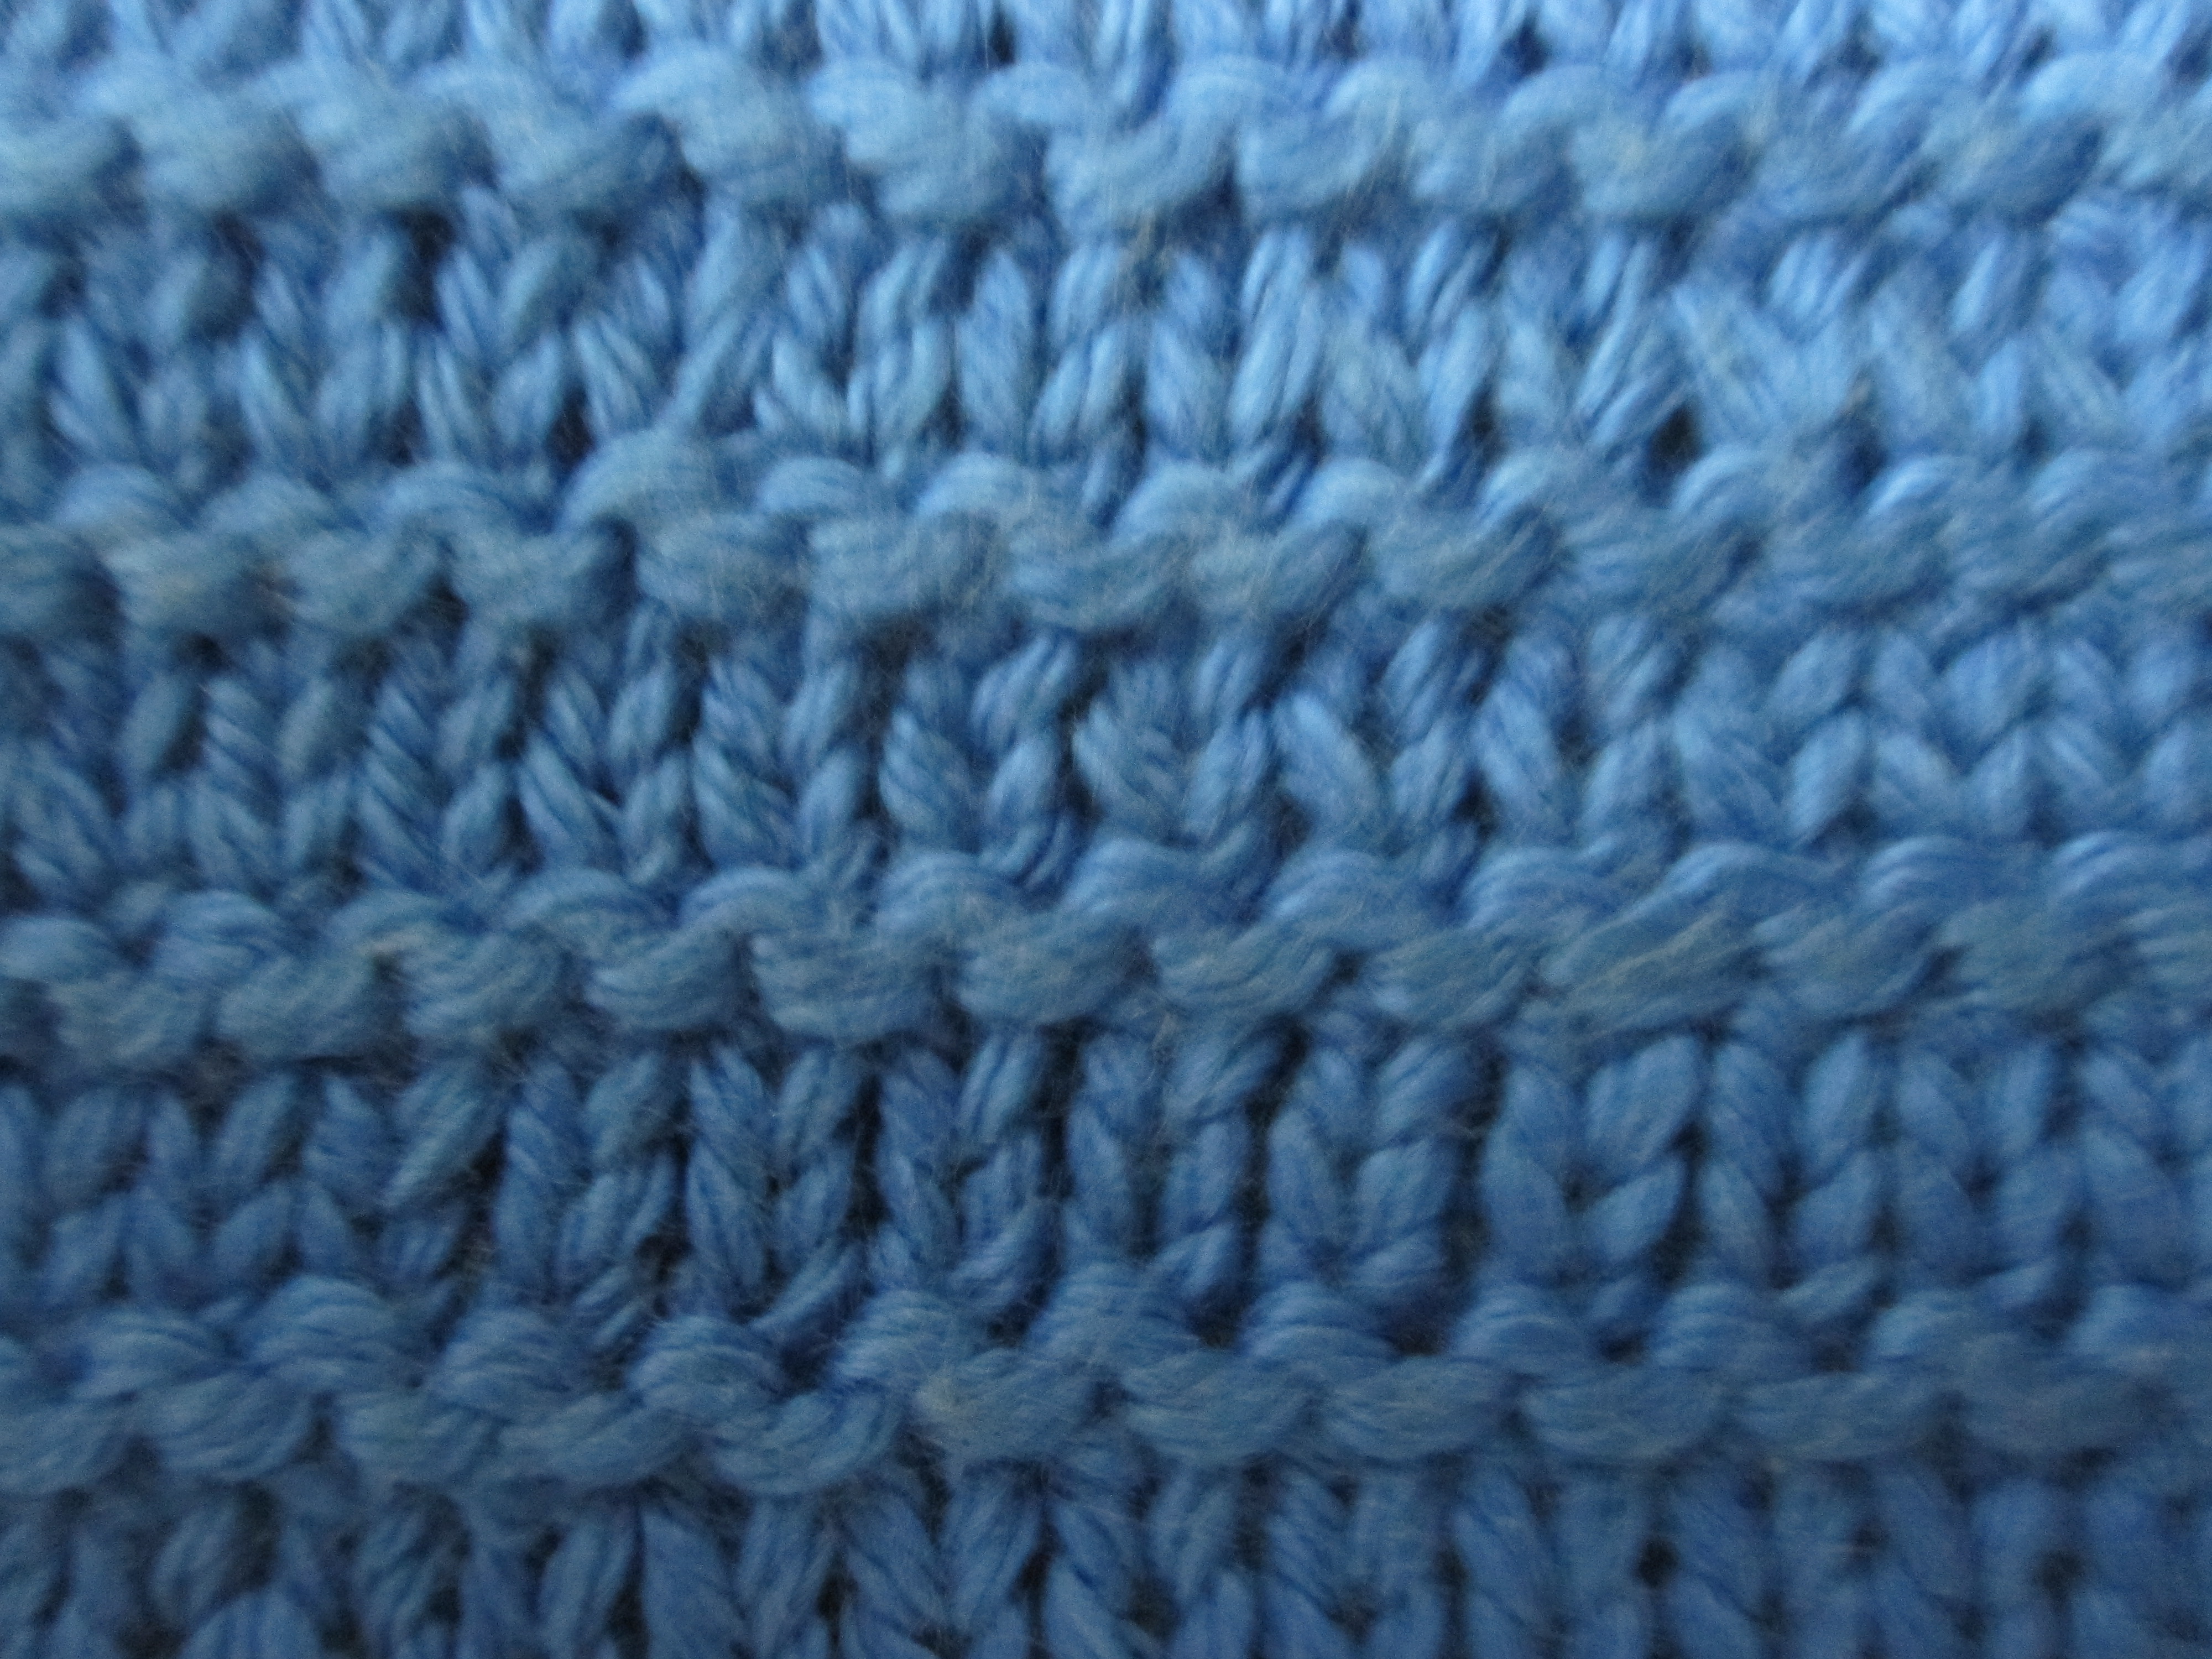 синяя, голубая вязаная ткань, скачать фото, фон, текстура, blue knitted background texture